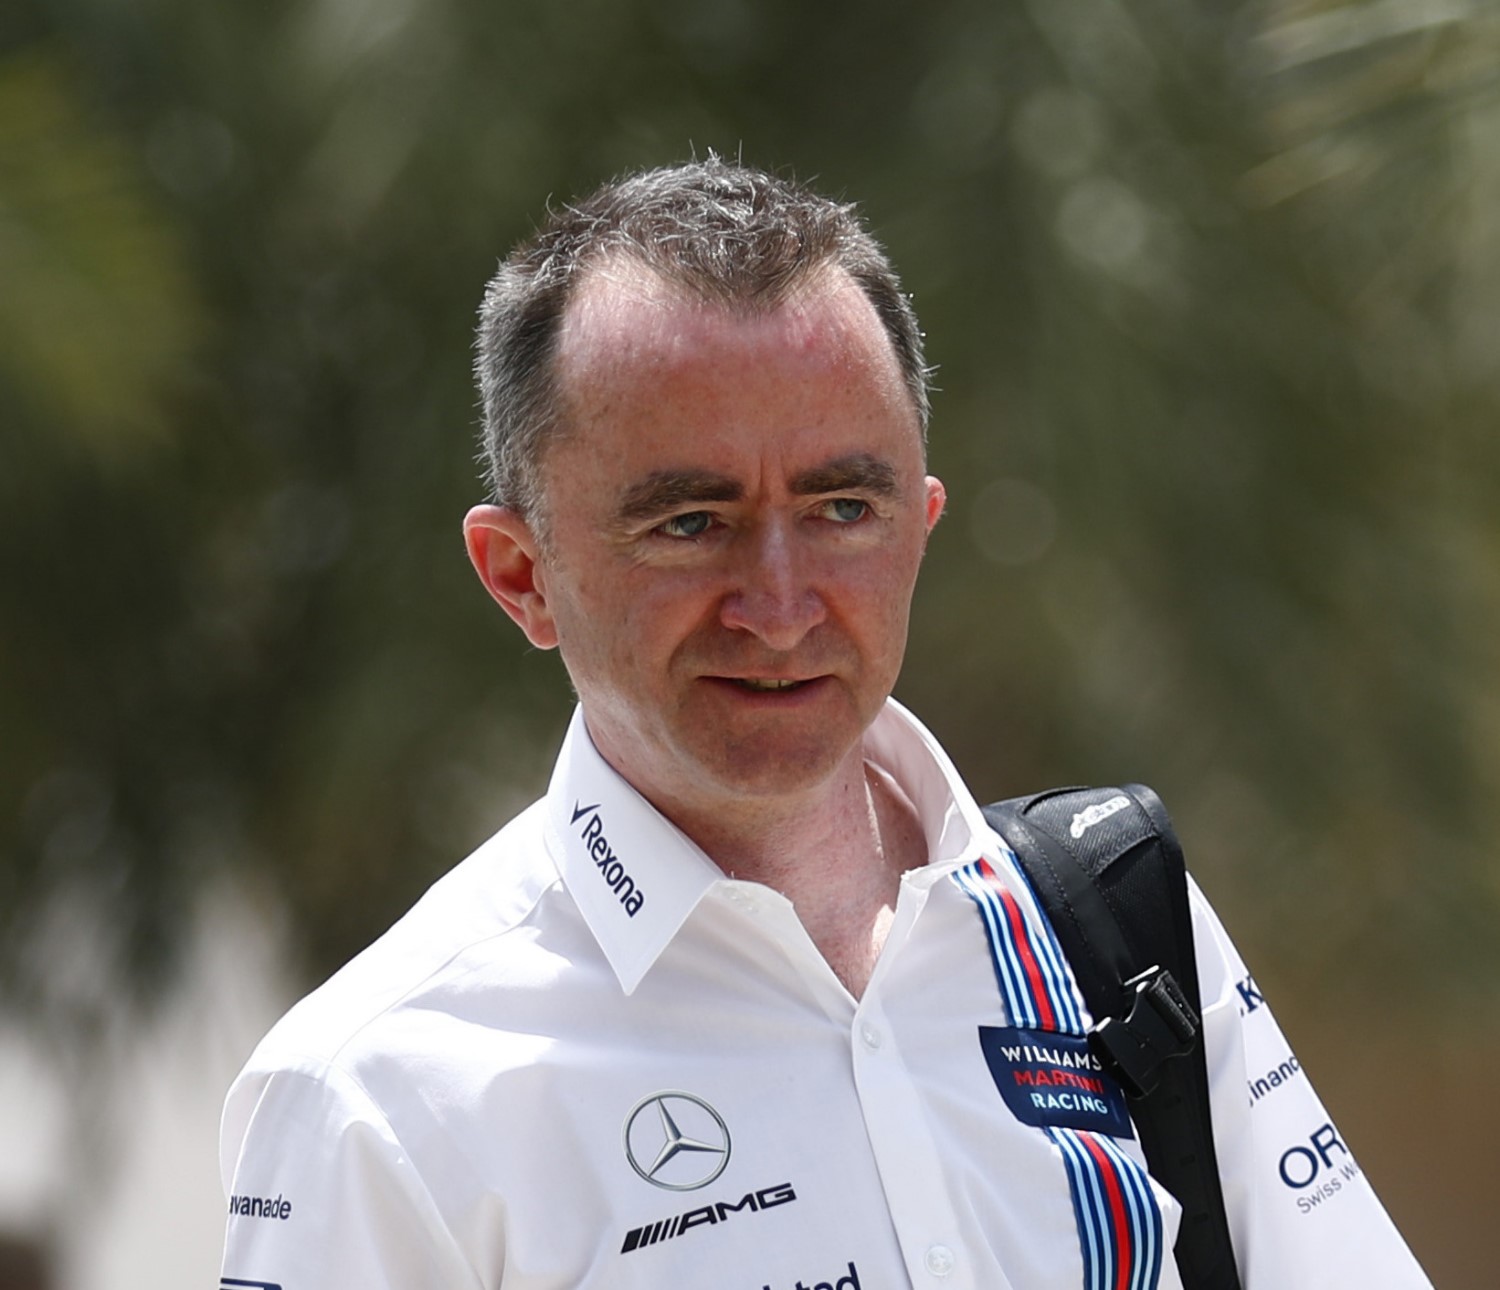 Paddy Lowe has failed the Williams team